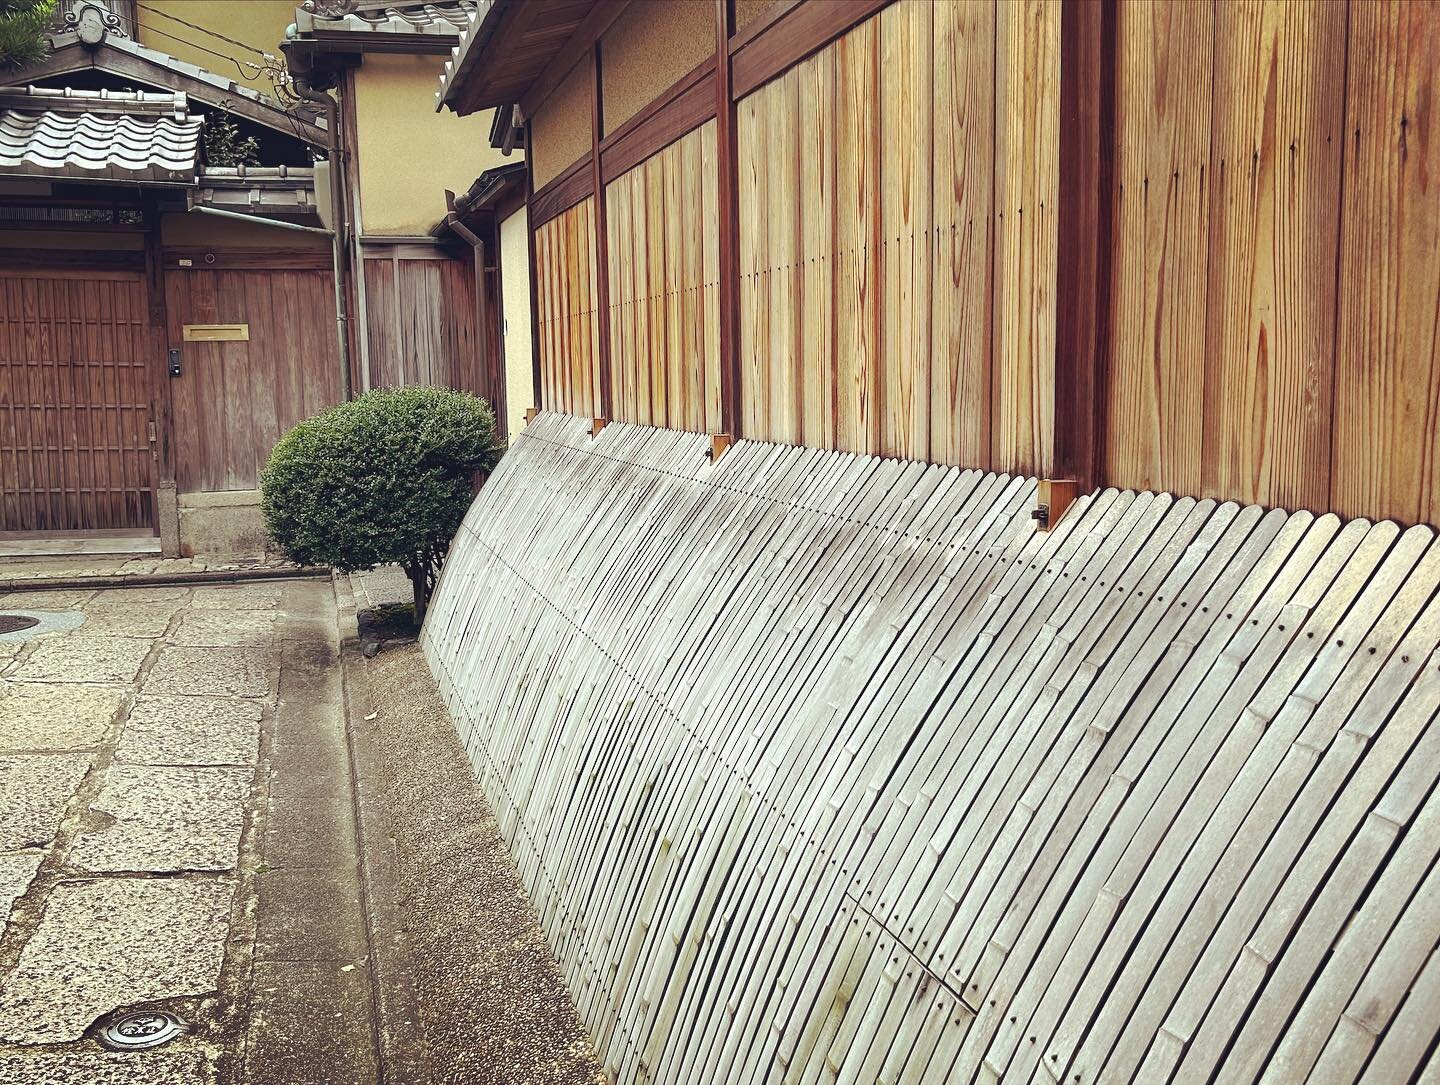 Inukaeshi in Kyōto 

京都の犬返し

#Kyoto #Inukaeshi #犬返し #京都 #Machiya #町屋